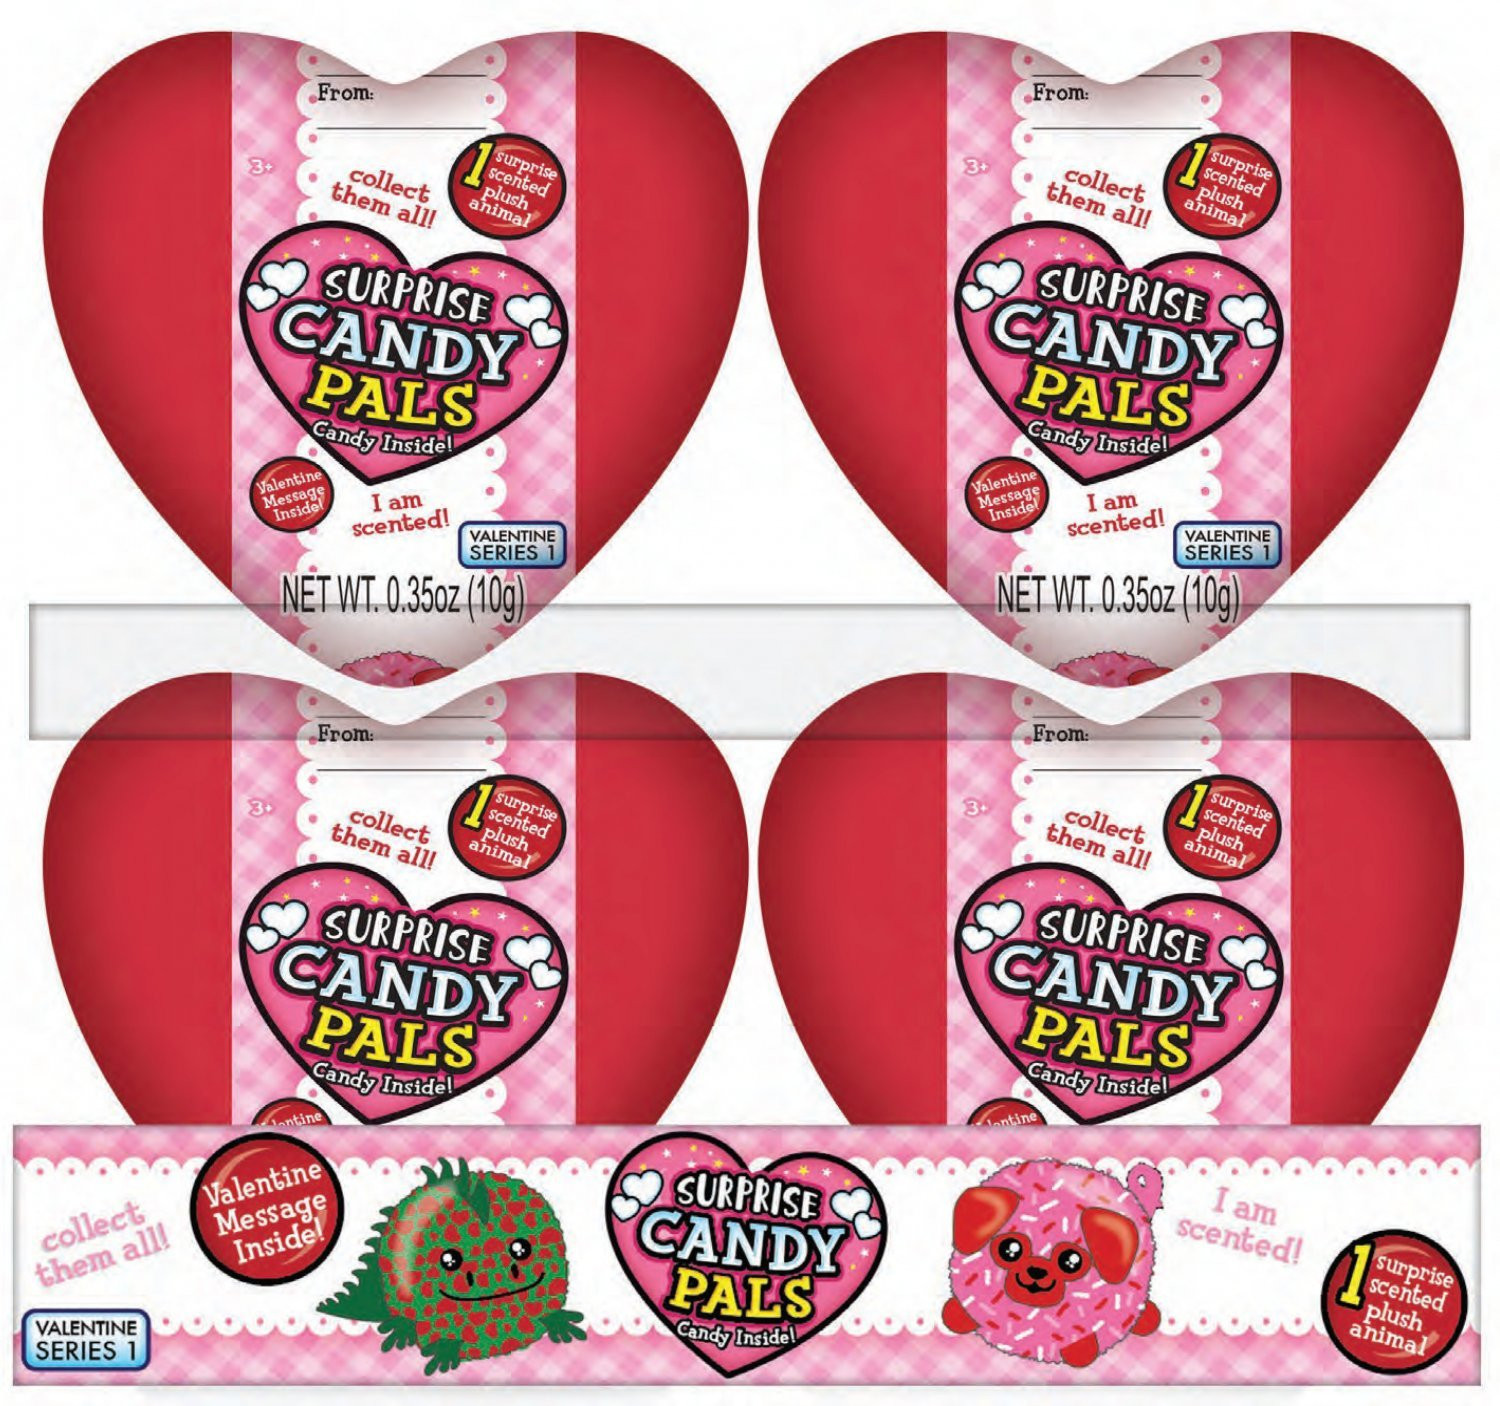 CandyRific  Valentine Surprise Candy Pals, Series 1